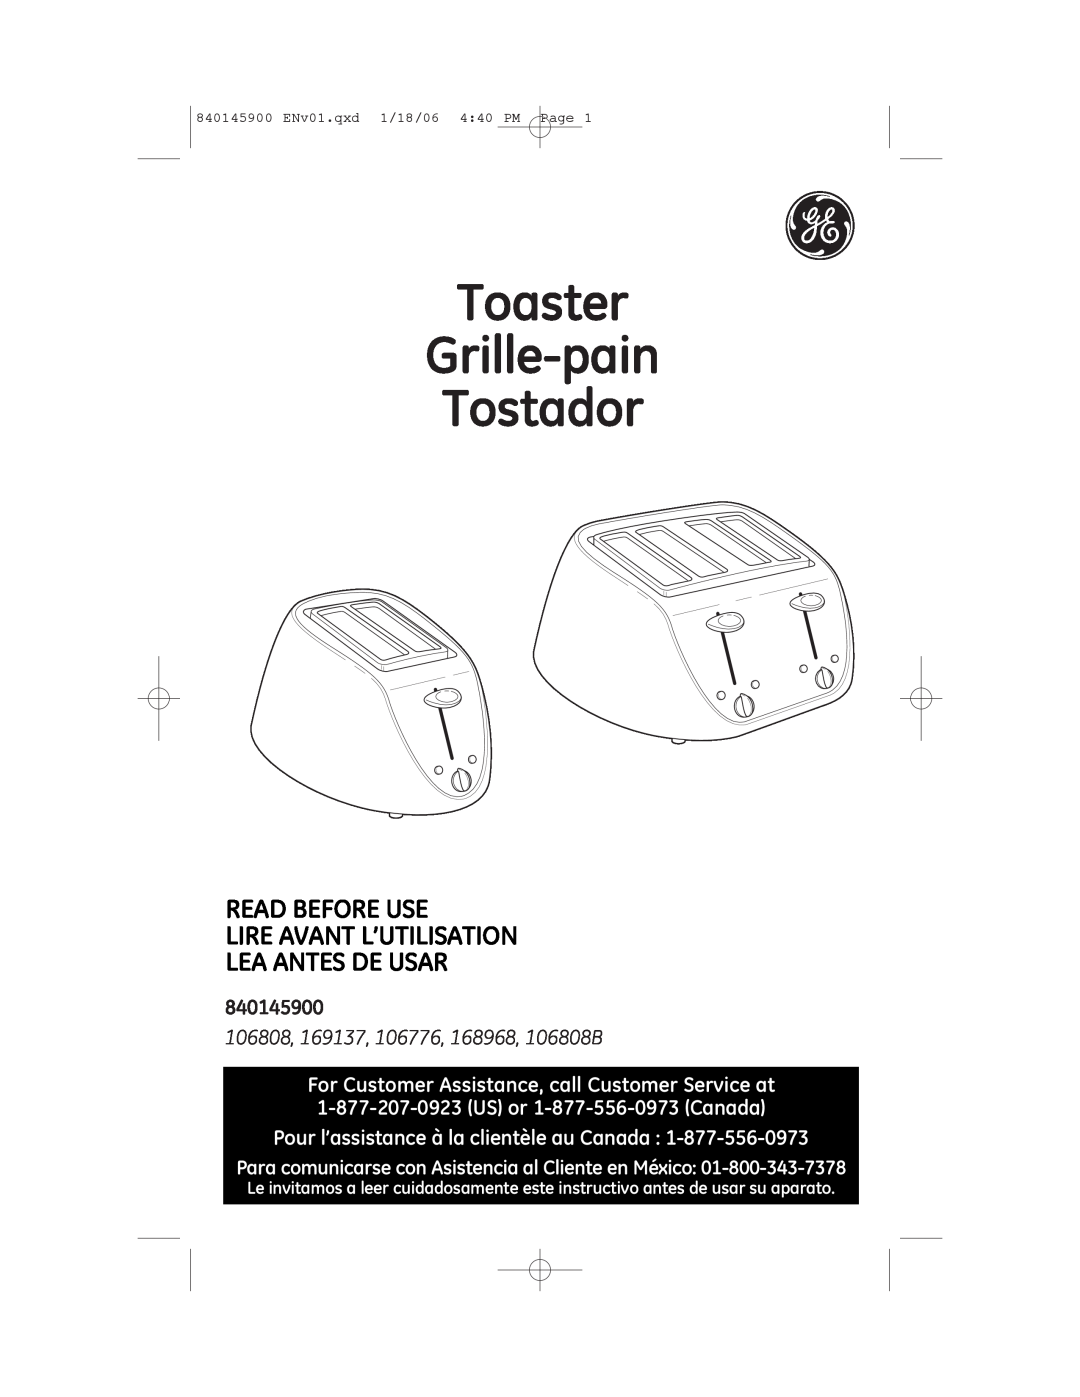 GE 168968 manual Toaster Grille-pain Tostador, Read Before Use Lire Avant L’Utilisation Lea Antes De Usar, 840145900 